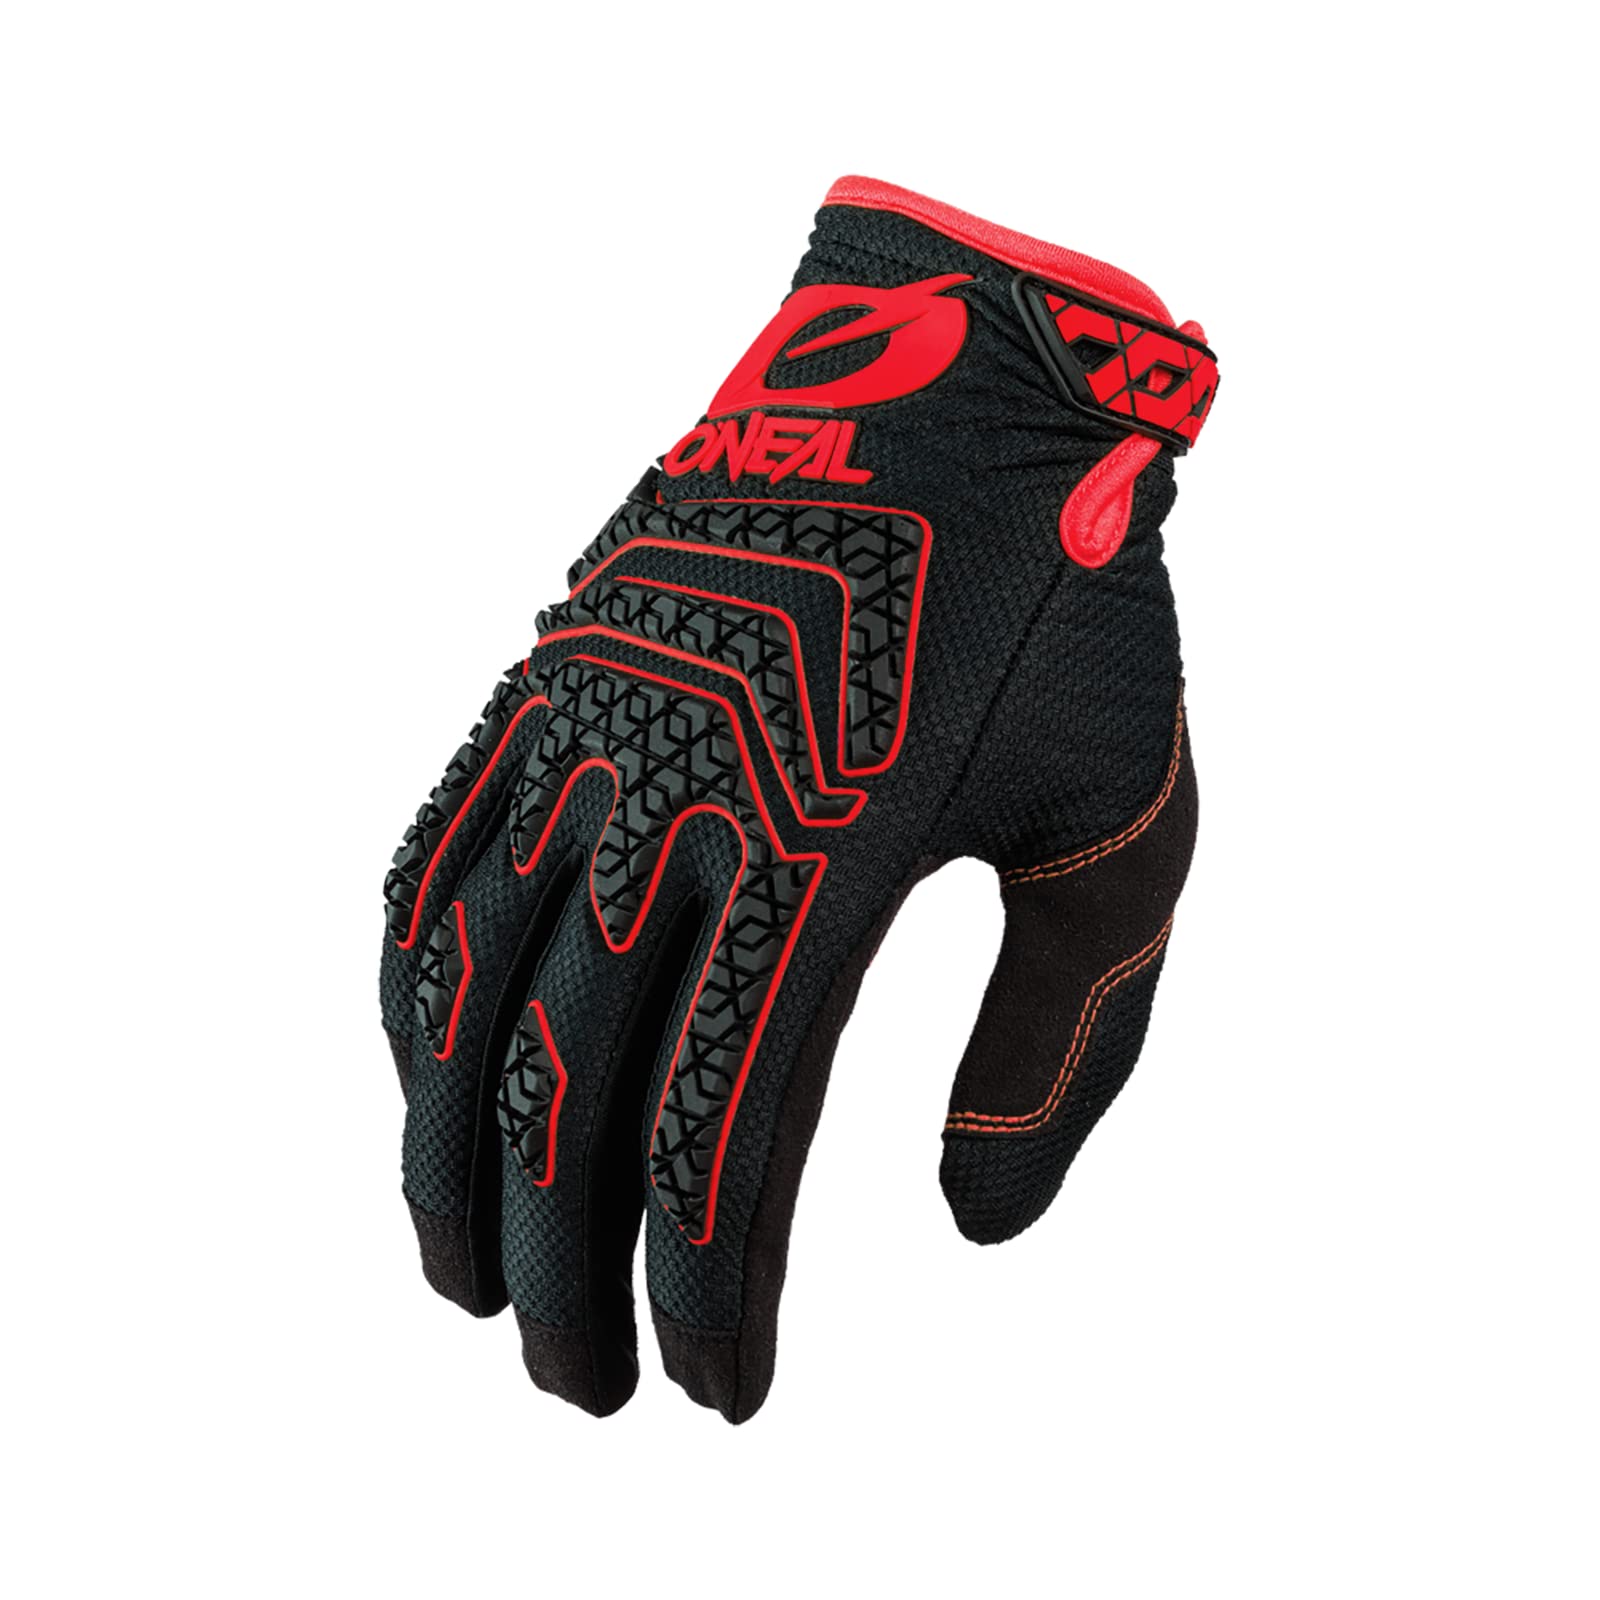 O'NEAL | Fahrrad- & Motocross-Handschuhe | MX MTB DH FR Downhill Freeride | Langlebige, Flexible Materialien, Silikonprint für Grip | Sniper Elite Glove | Erwachsene | Schwarz Rot | Größe S von O'NEAL